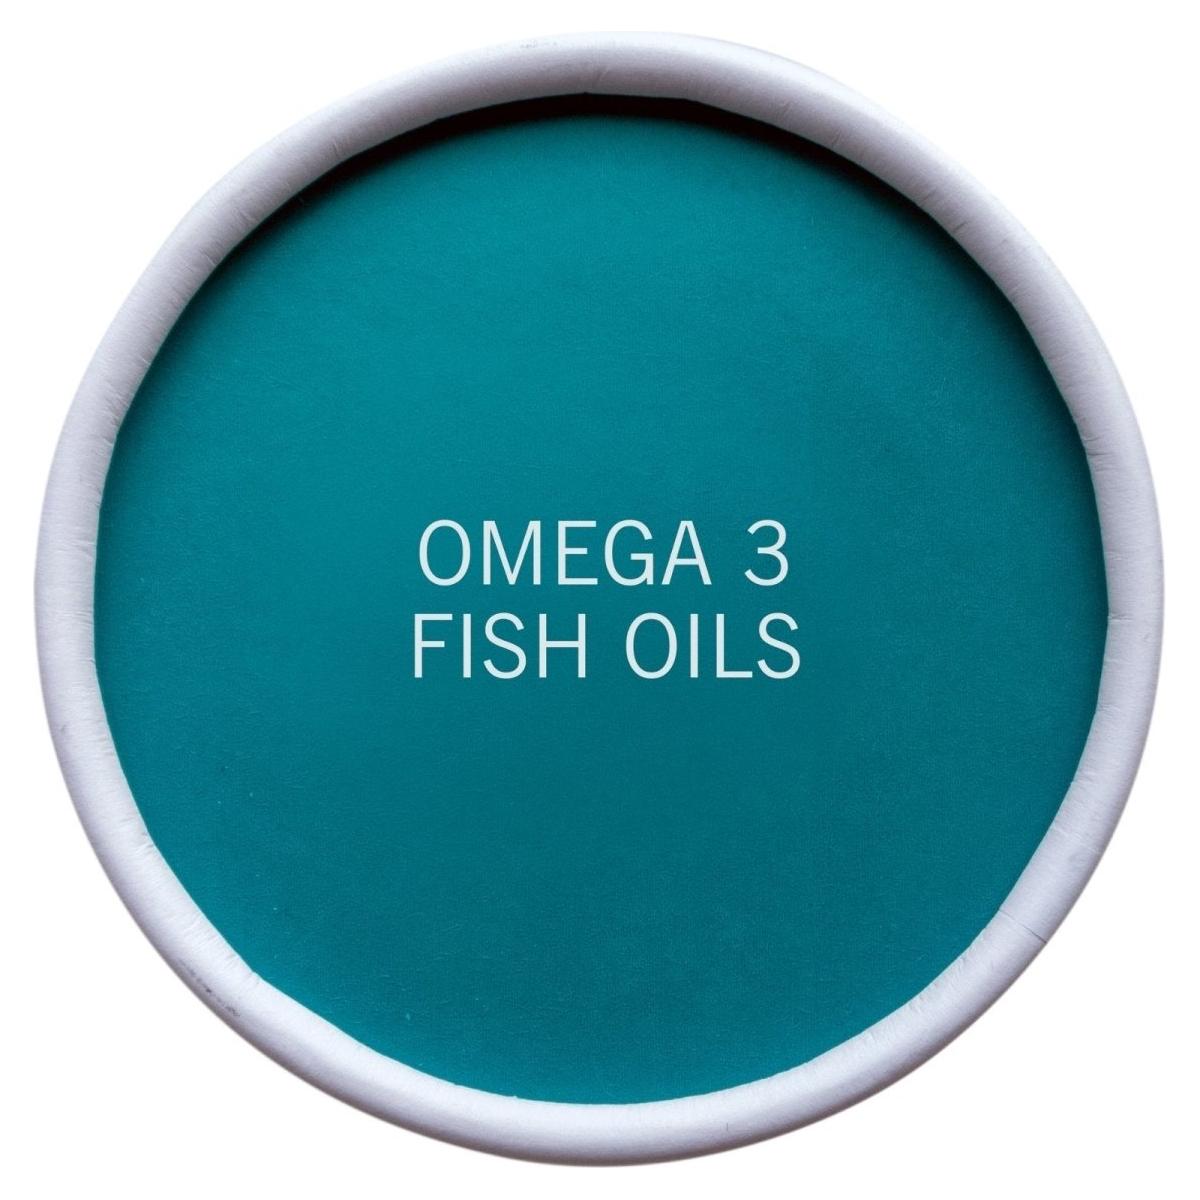 Advanced Nutrition Programme | Omega 3 Fish Oils | 60 caps - DG International Ventures Limited